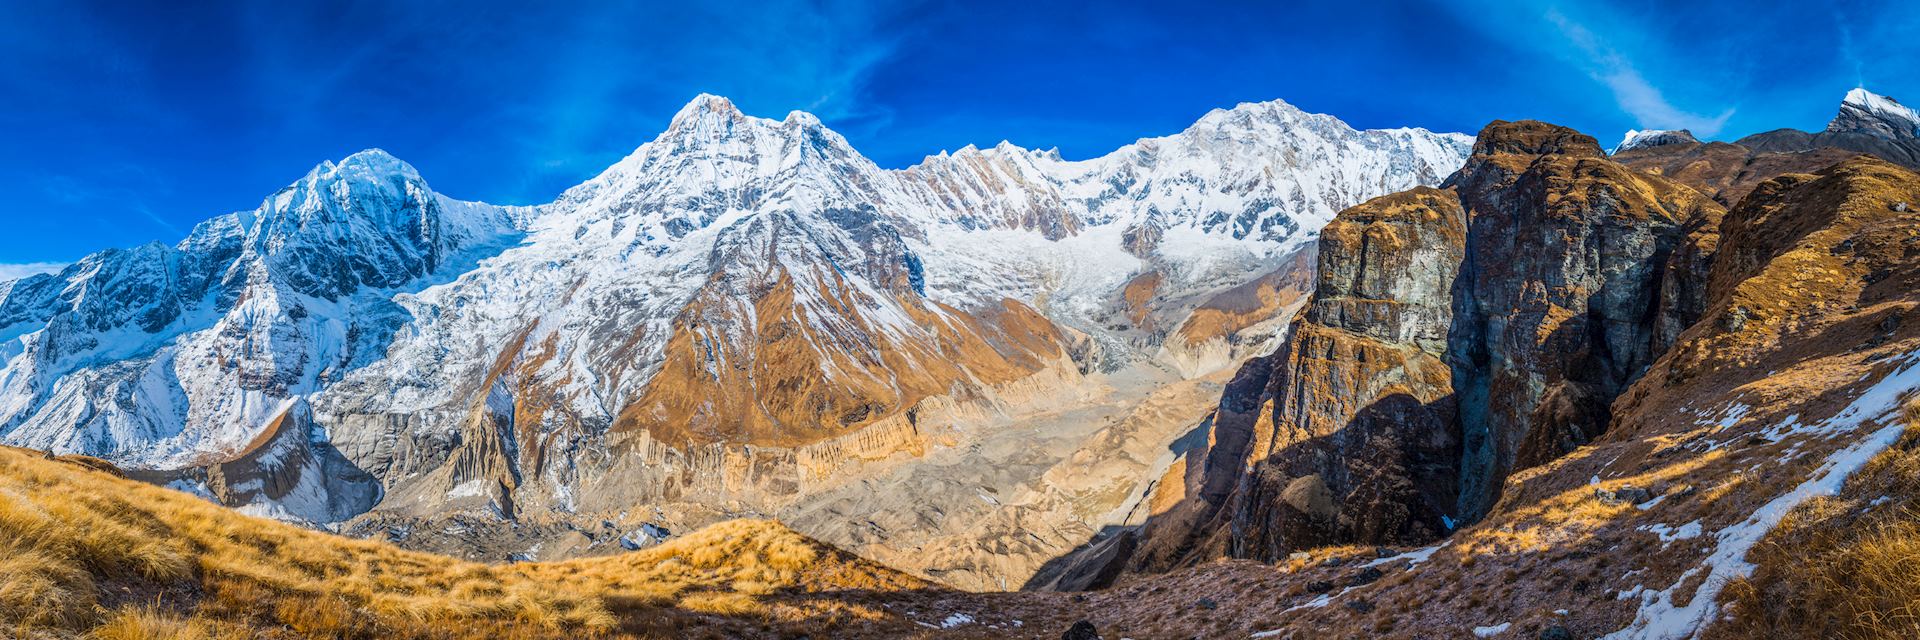 The Annapurna range in Nepal